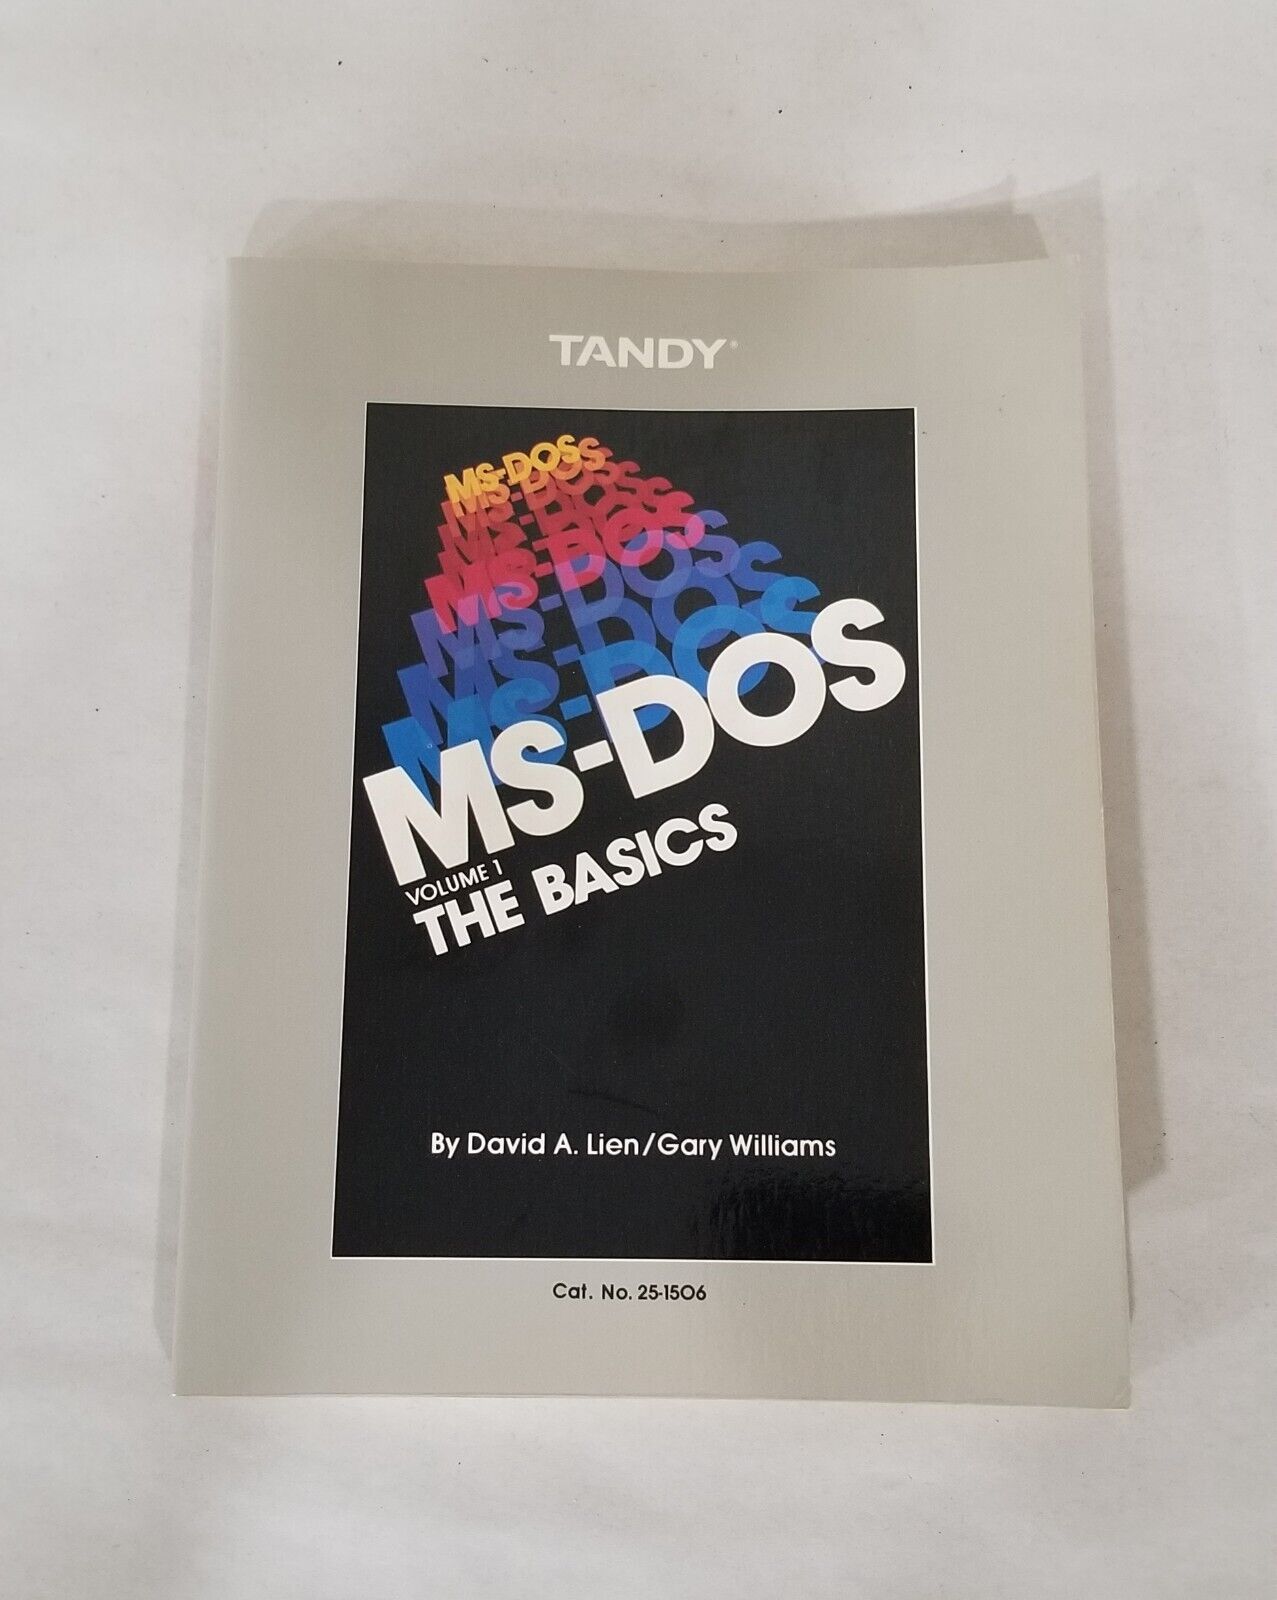 Tandy MS-DOS The Basics Vol 1 David Lien & Gary Williams 1985 No. 25-1506